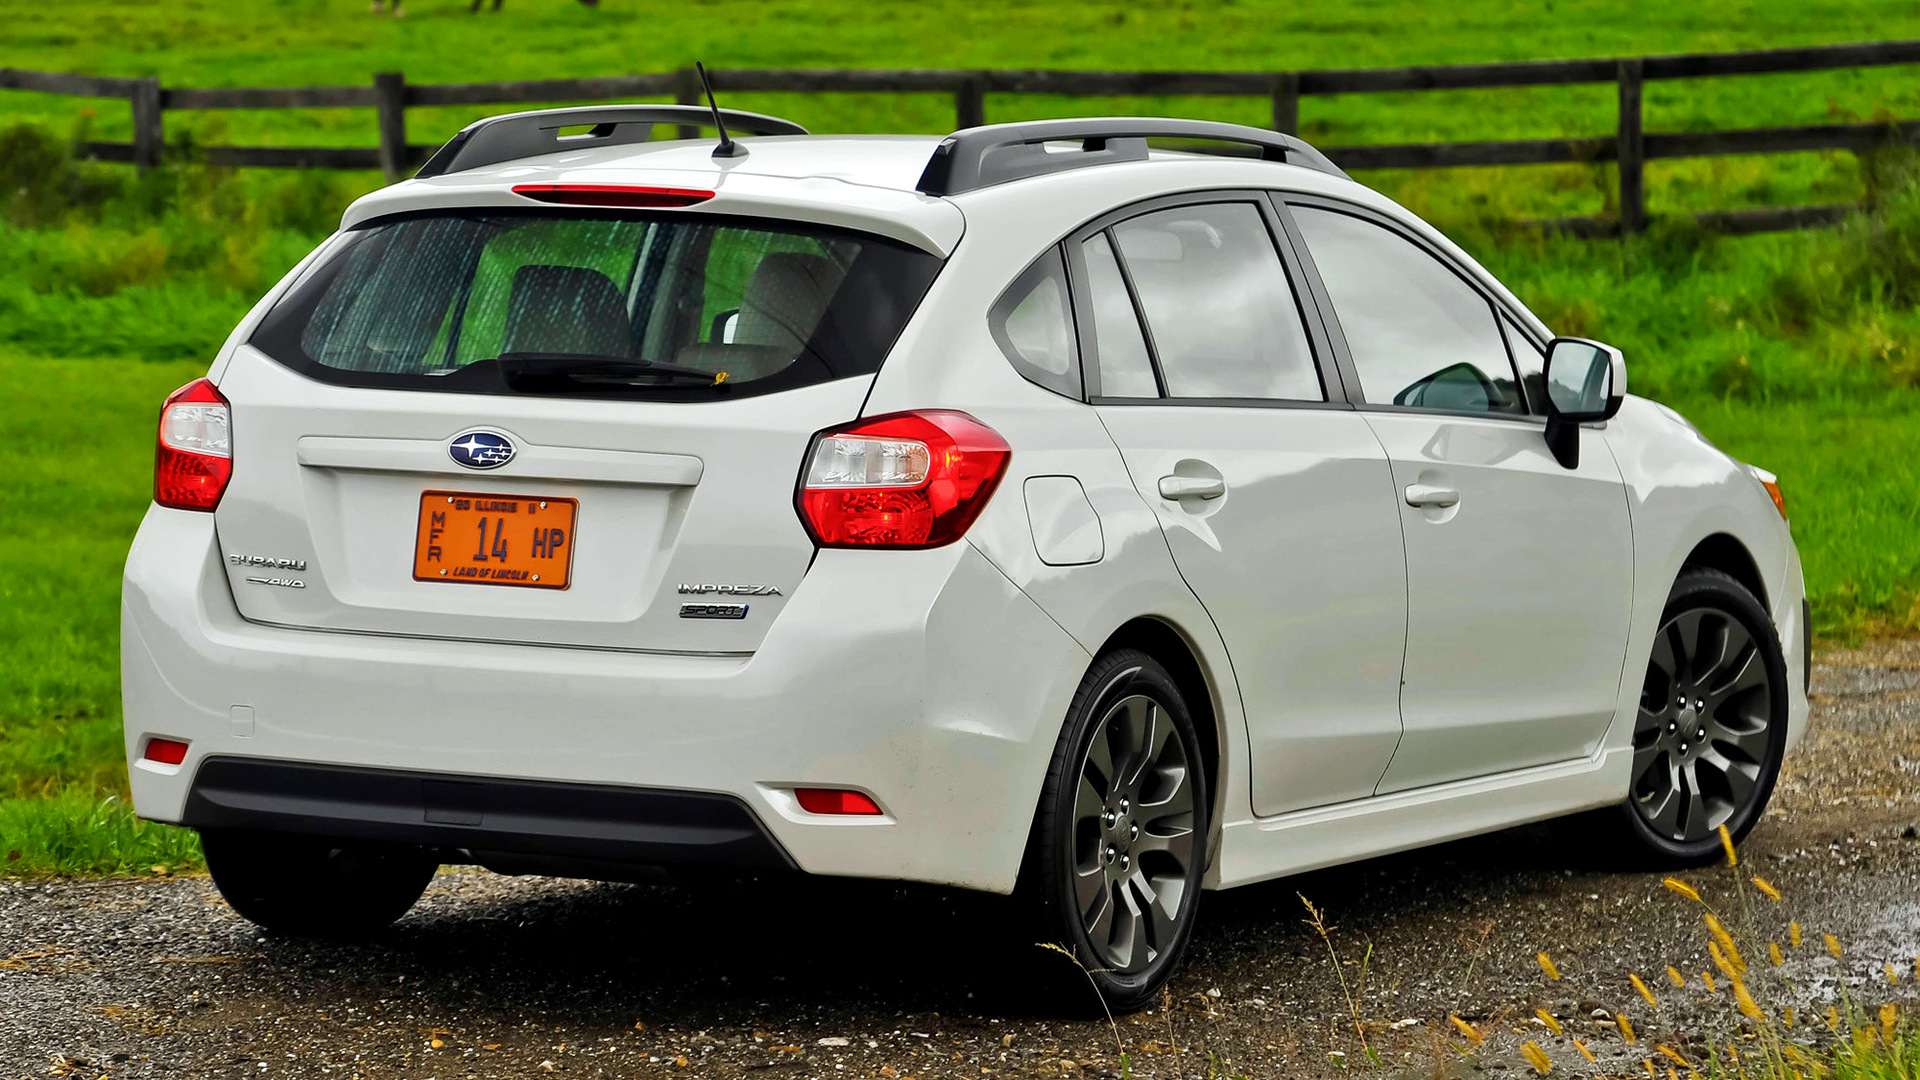 2011 Subaru Impreza Sport Hatchback (US) Wallpapers and